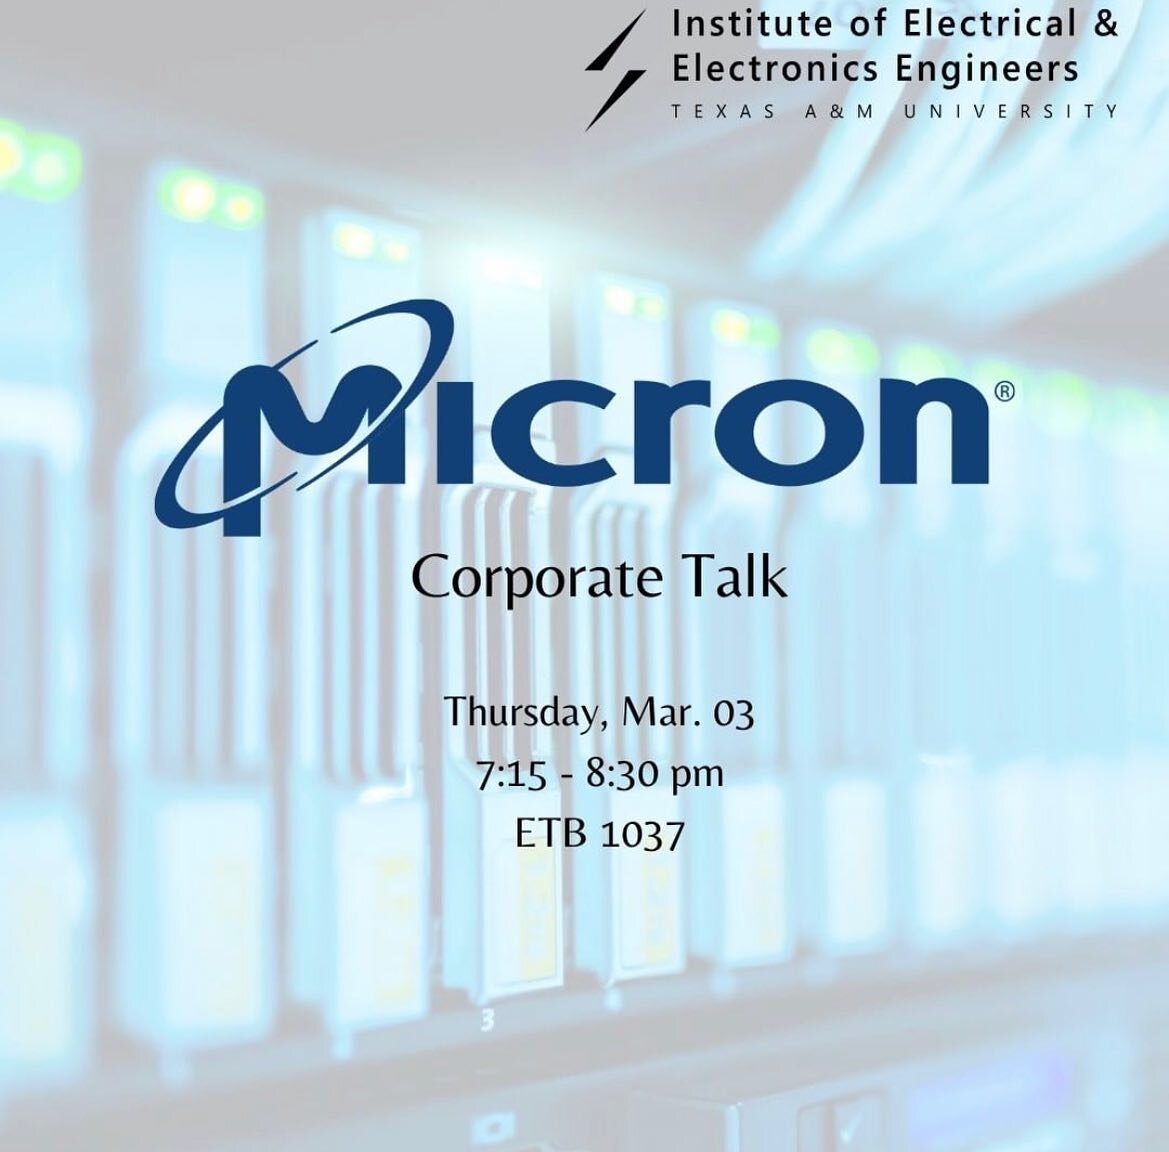 MICRON CORPORATE TALK
MAR 03 | 7:15 - 8:30 | ETB 1037